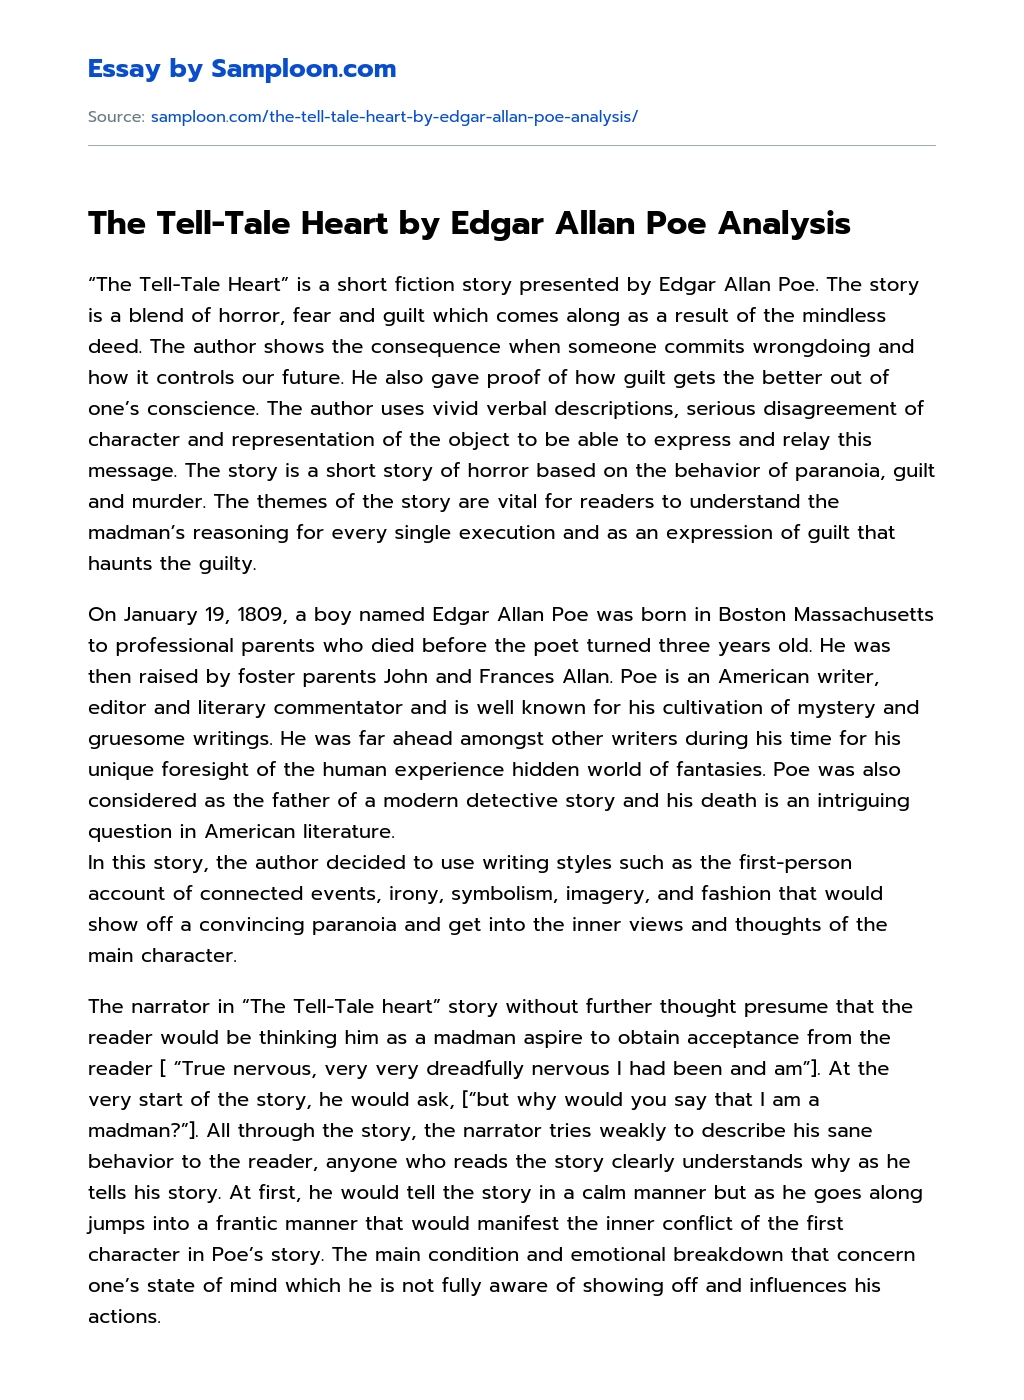 The Tell-Tale Heart by Edgar Allan Poe Analysis essay